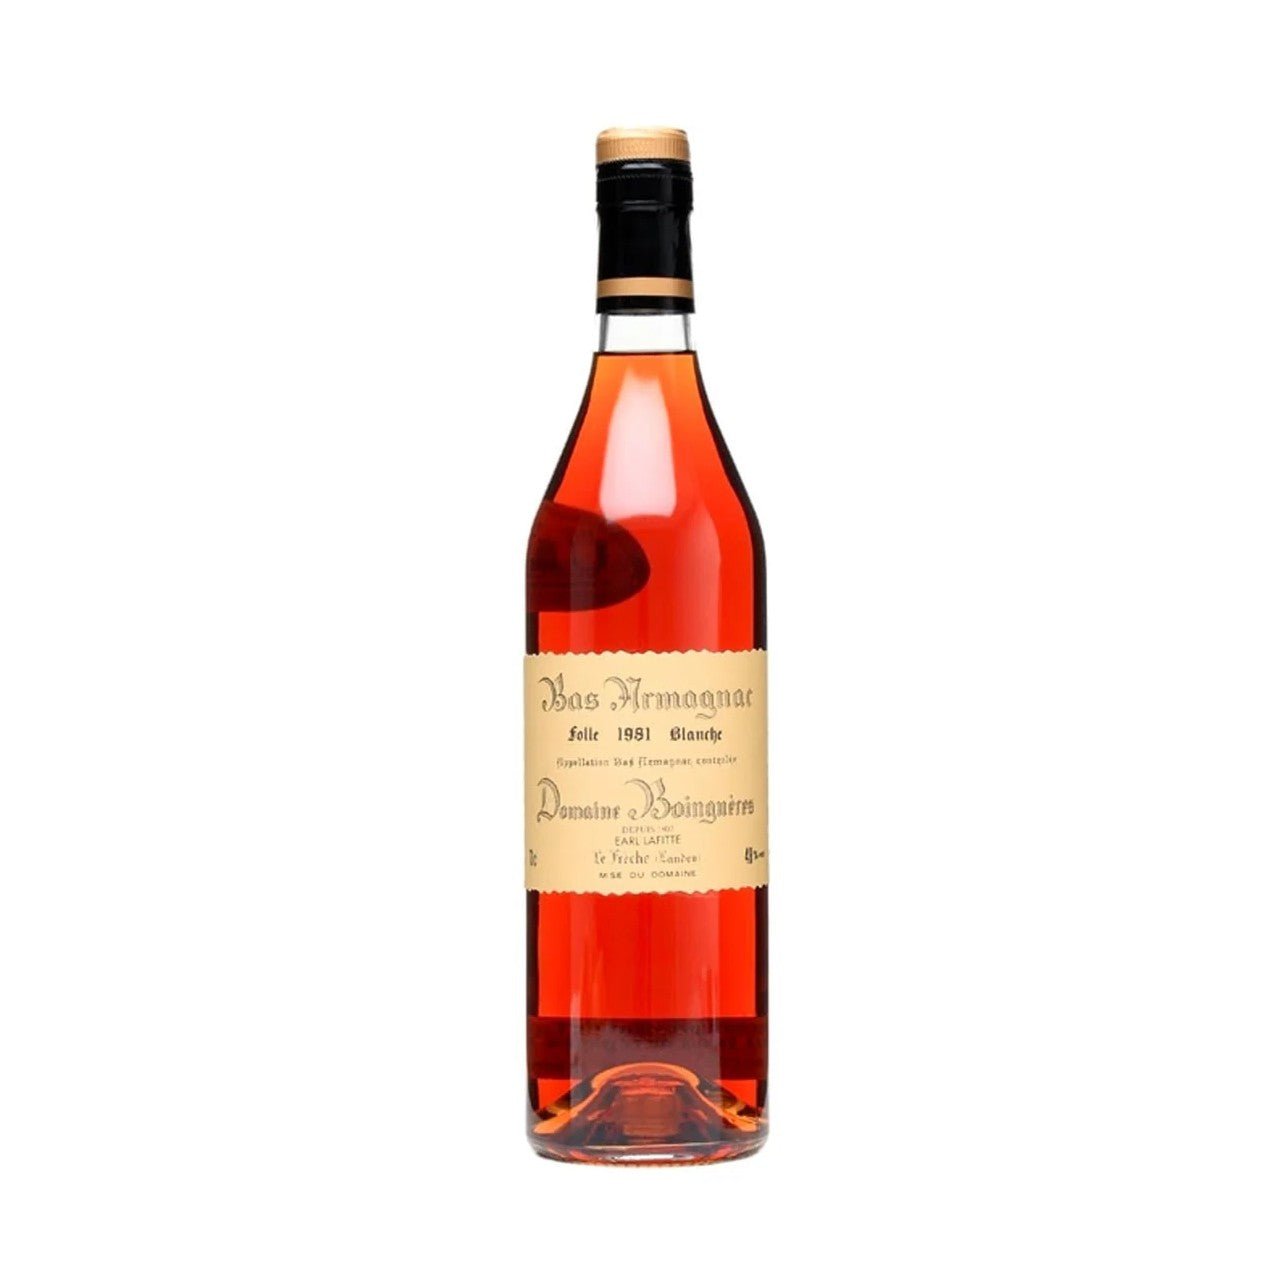 Domaine Boingneres 1981 Folle Blanche Grand Bas Armagnac 48% 700ml - armagnac - Liquor Wine Cave